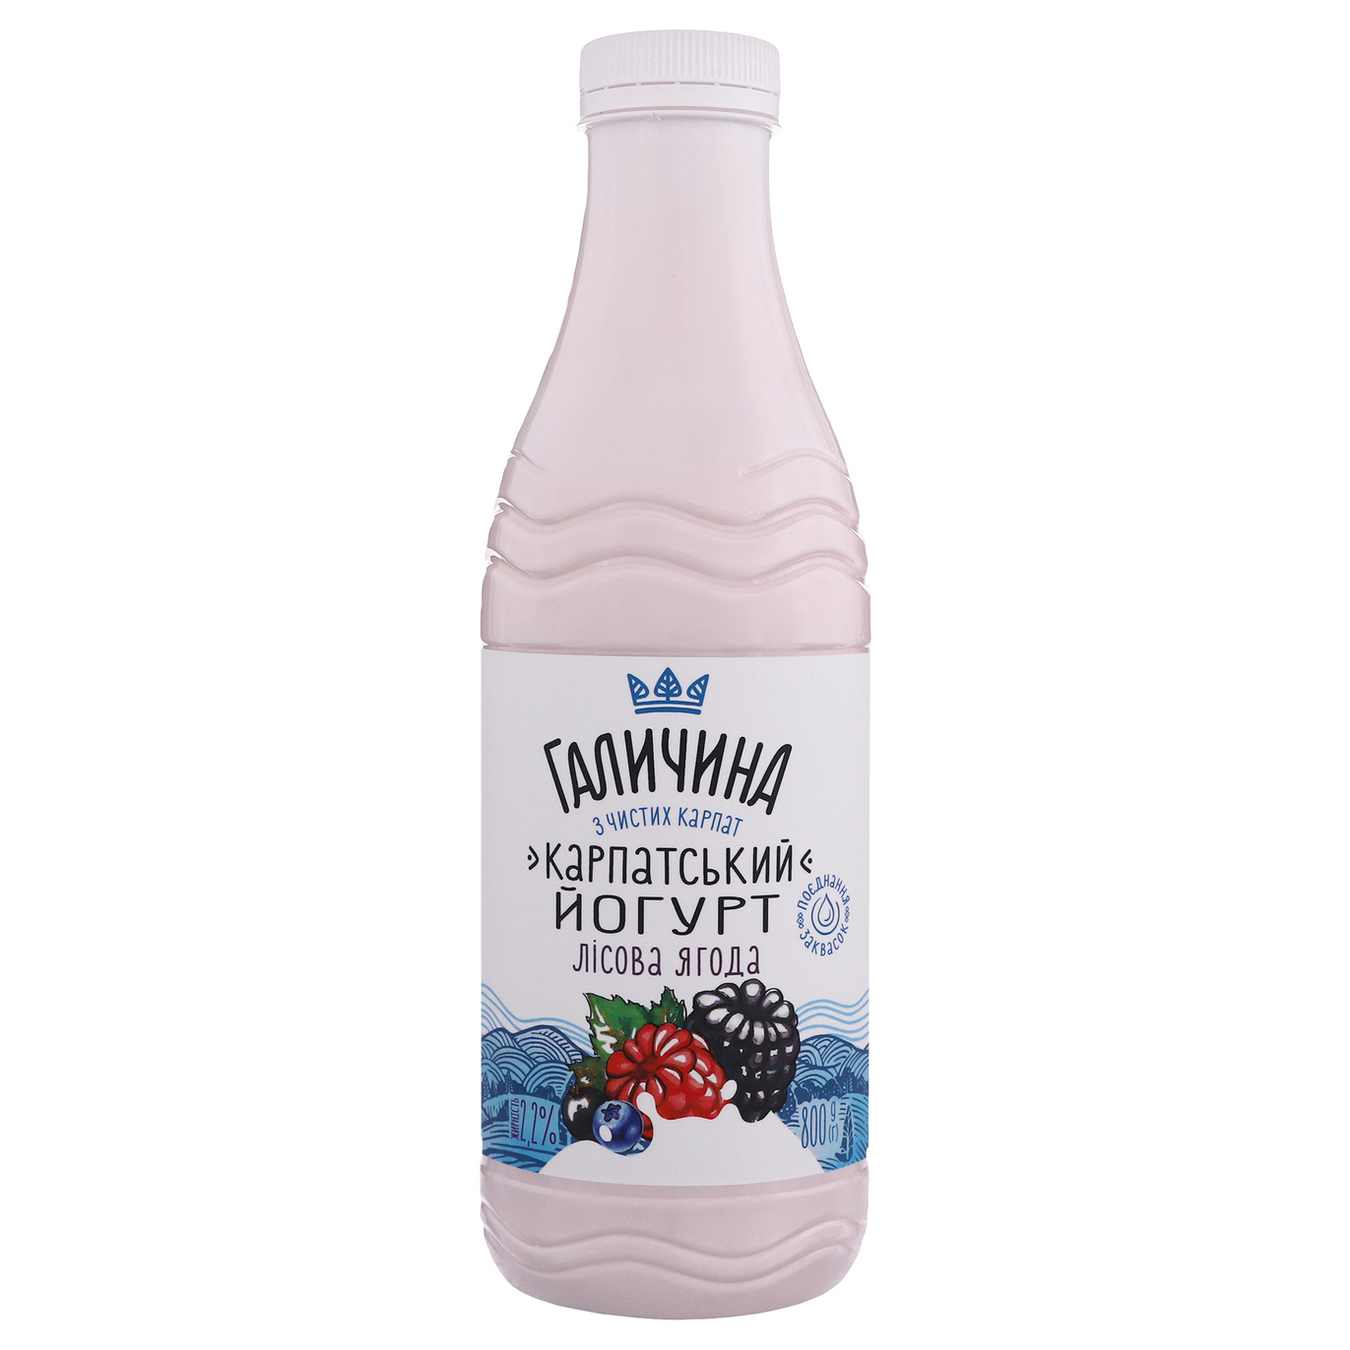 Halychyna Karpatsʹkyy Forest berry Yogurt 2,2% 800g